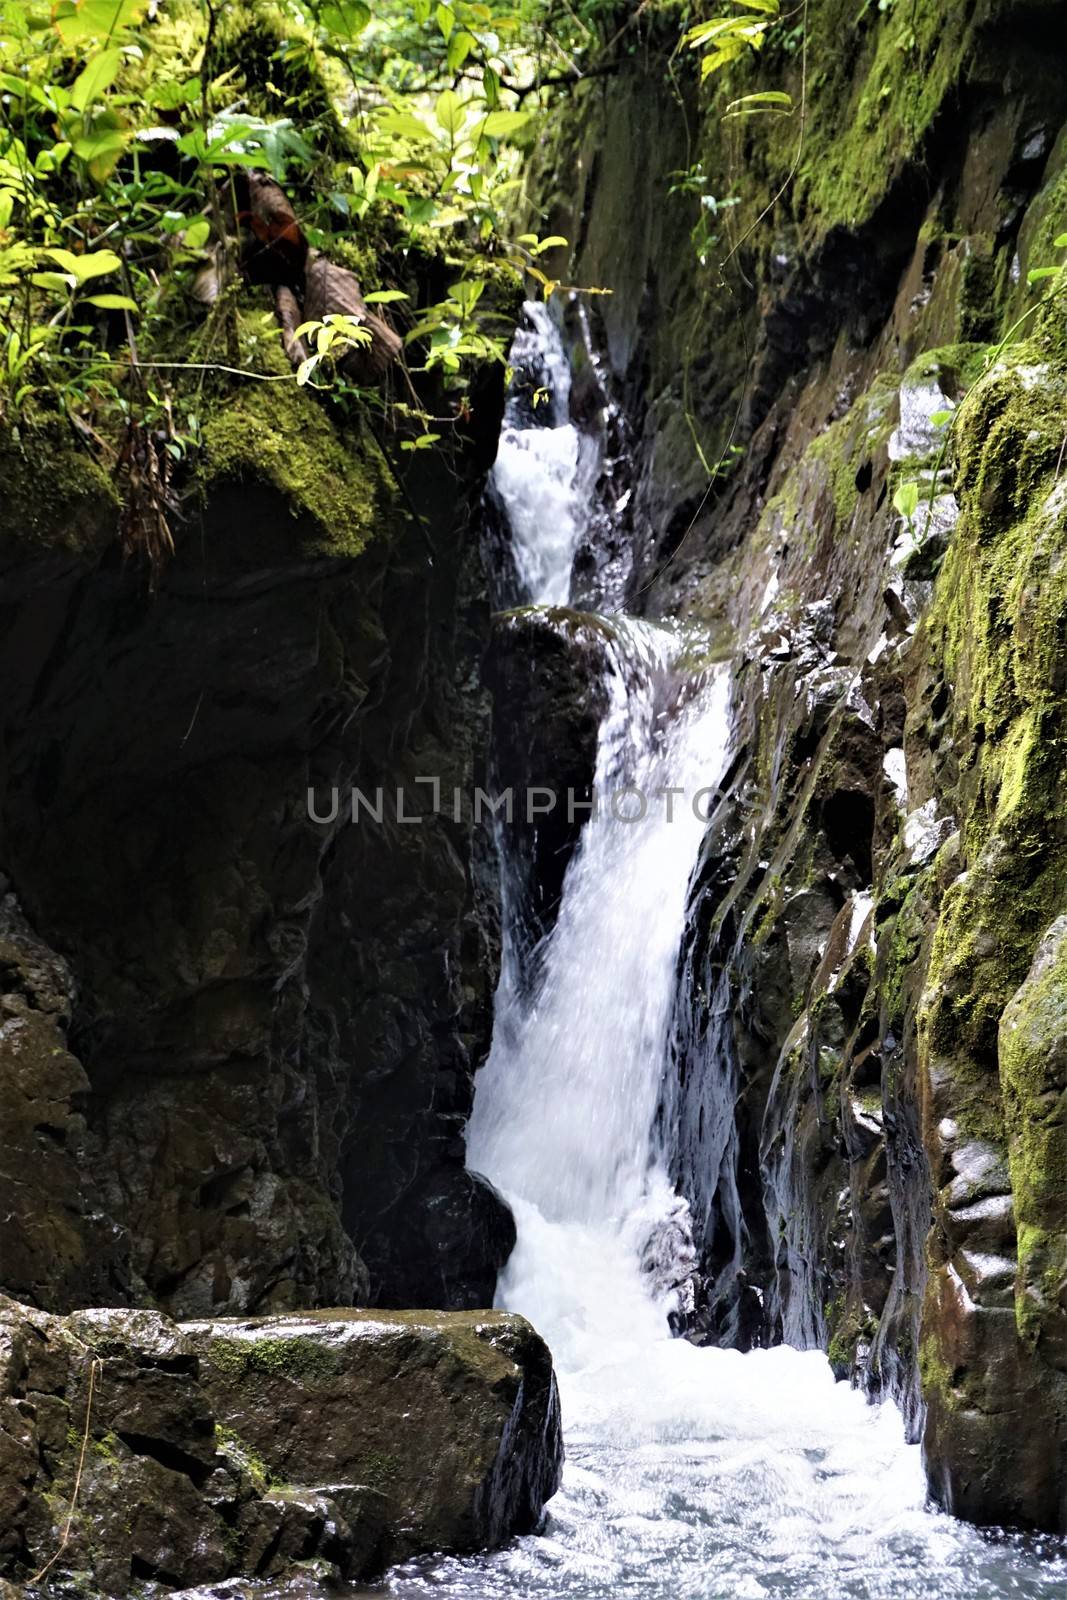 Small waterfall in Las Quebradas Biological Center, Costa Rica